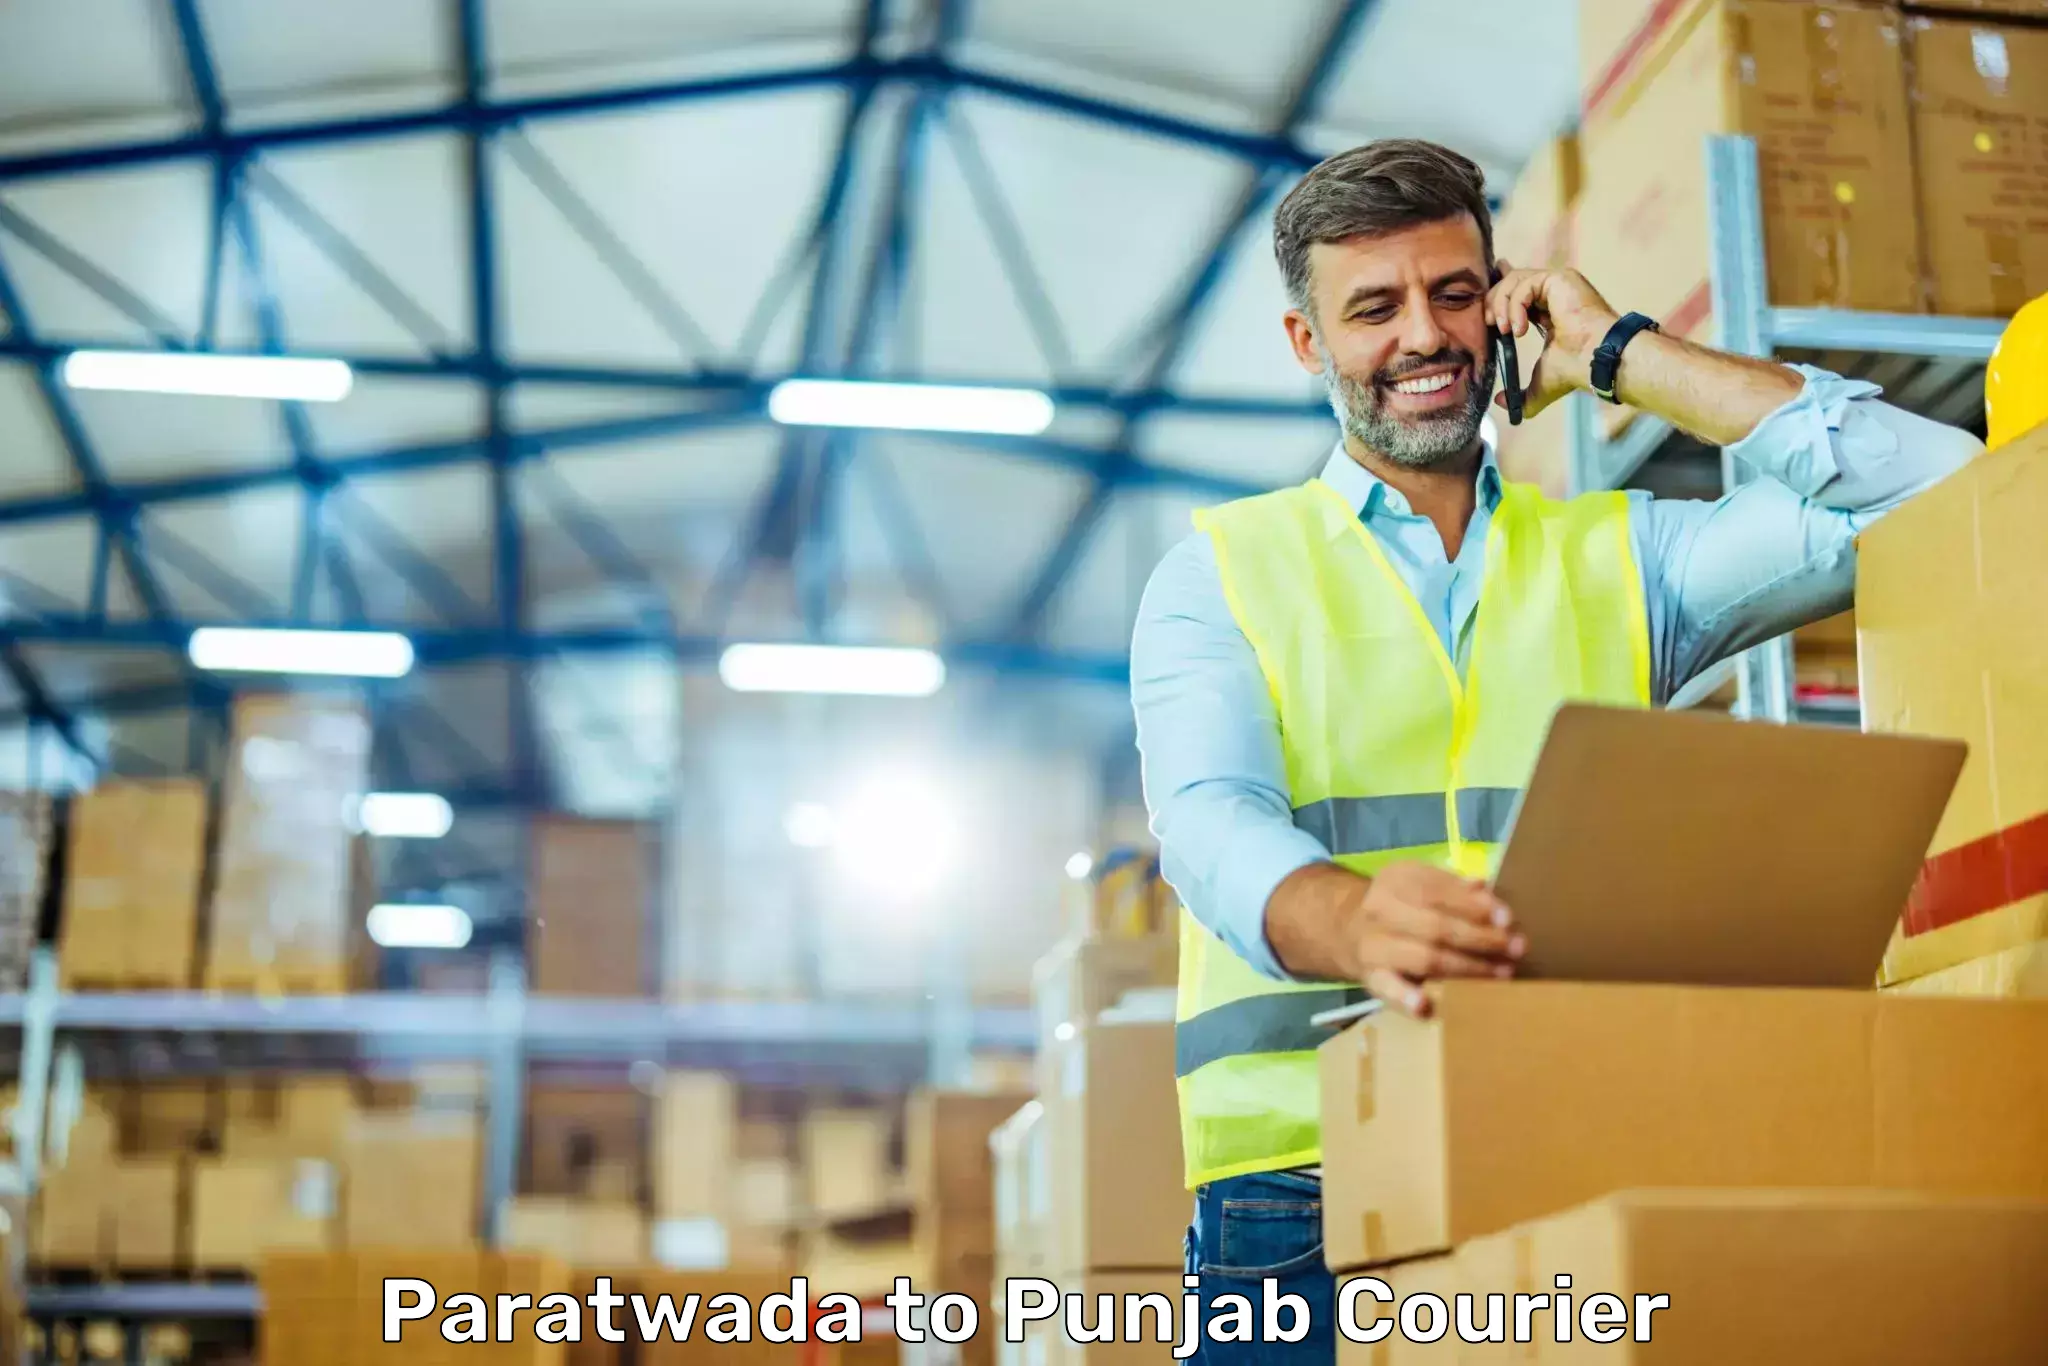 User-friendly delivery service Paratwada to Talwara